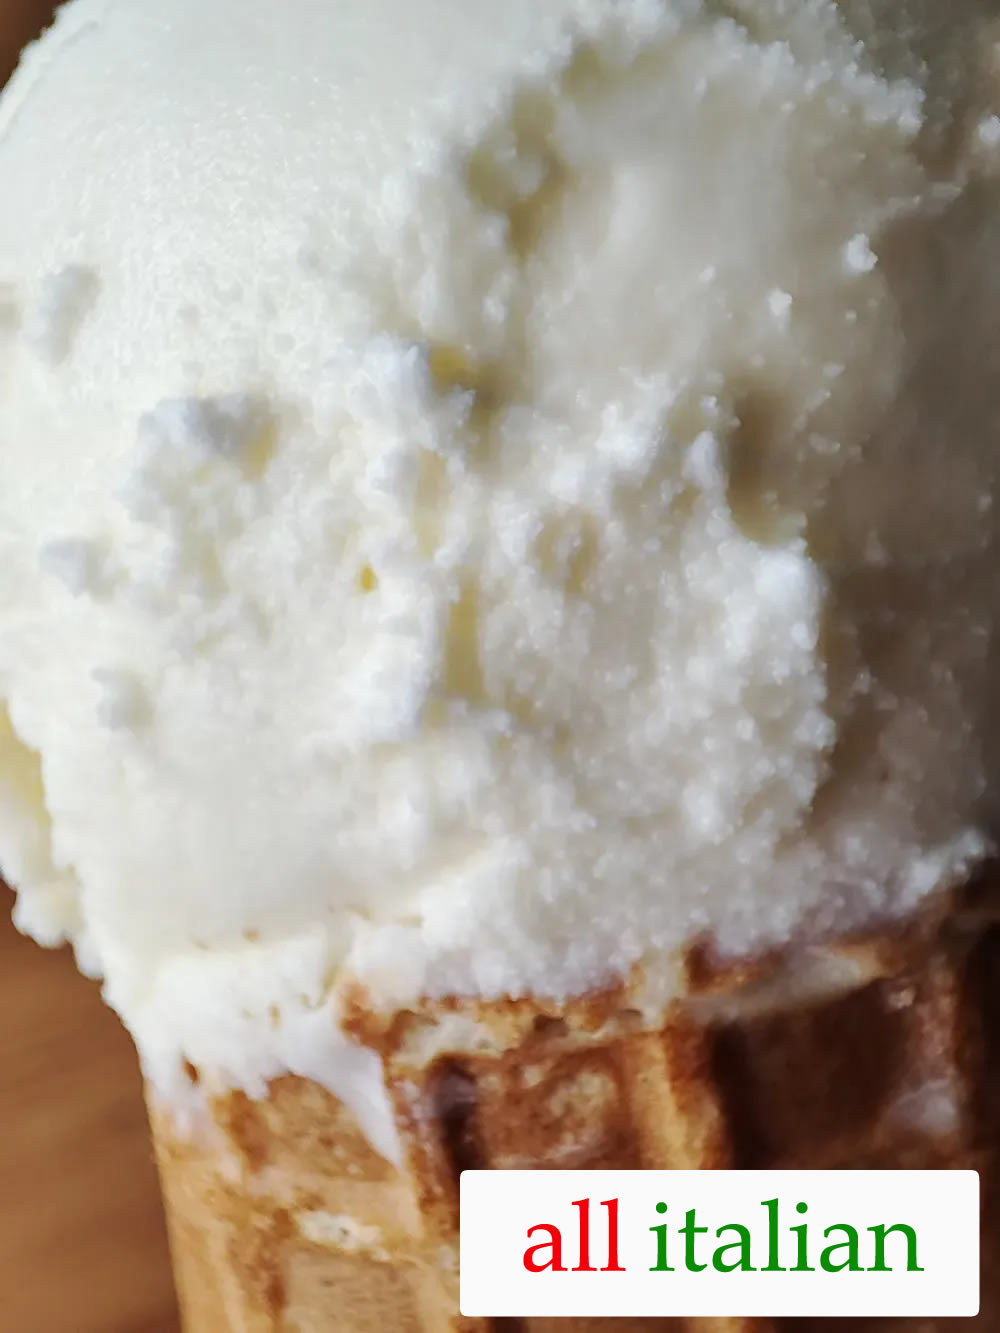 A close-up view of our Italian fiordilatte ice cream